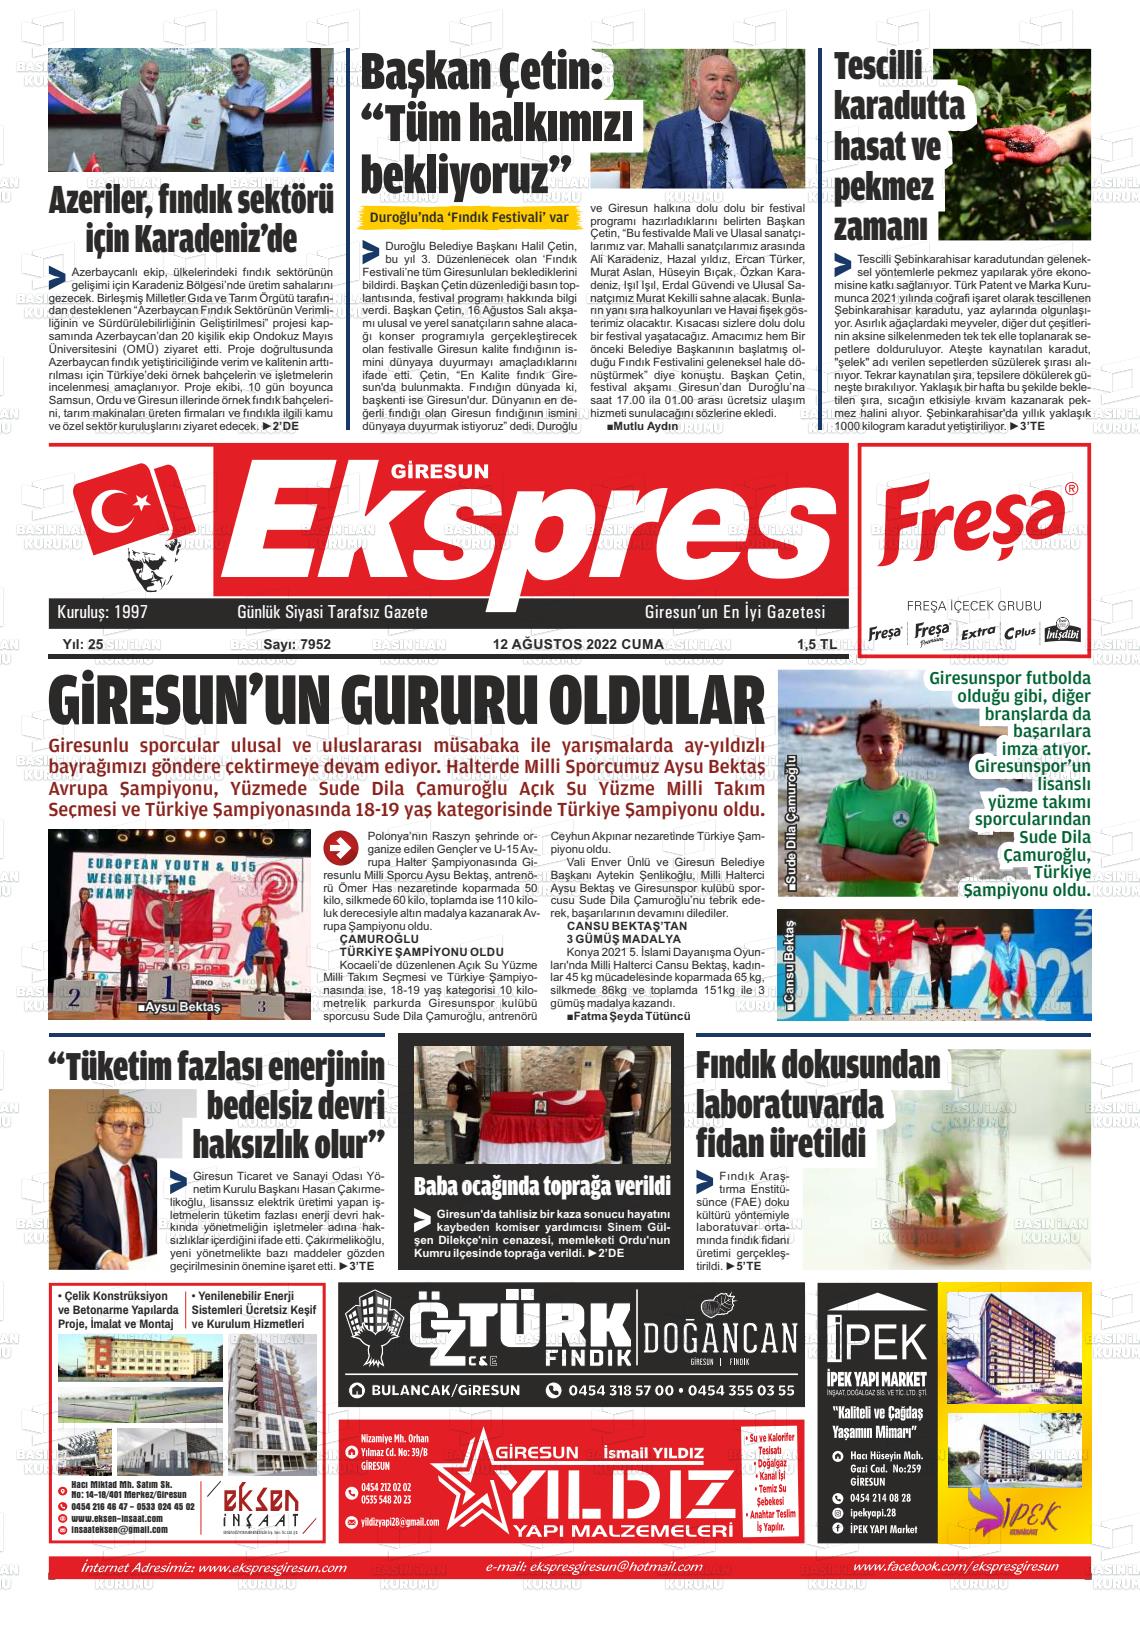 12 Ağustos 2022 Giresun Ekspres Gazete Manşeti